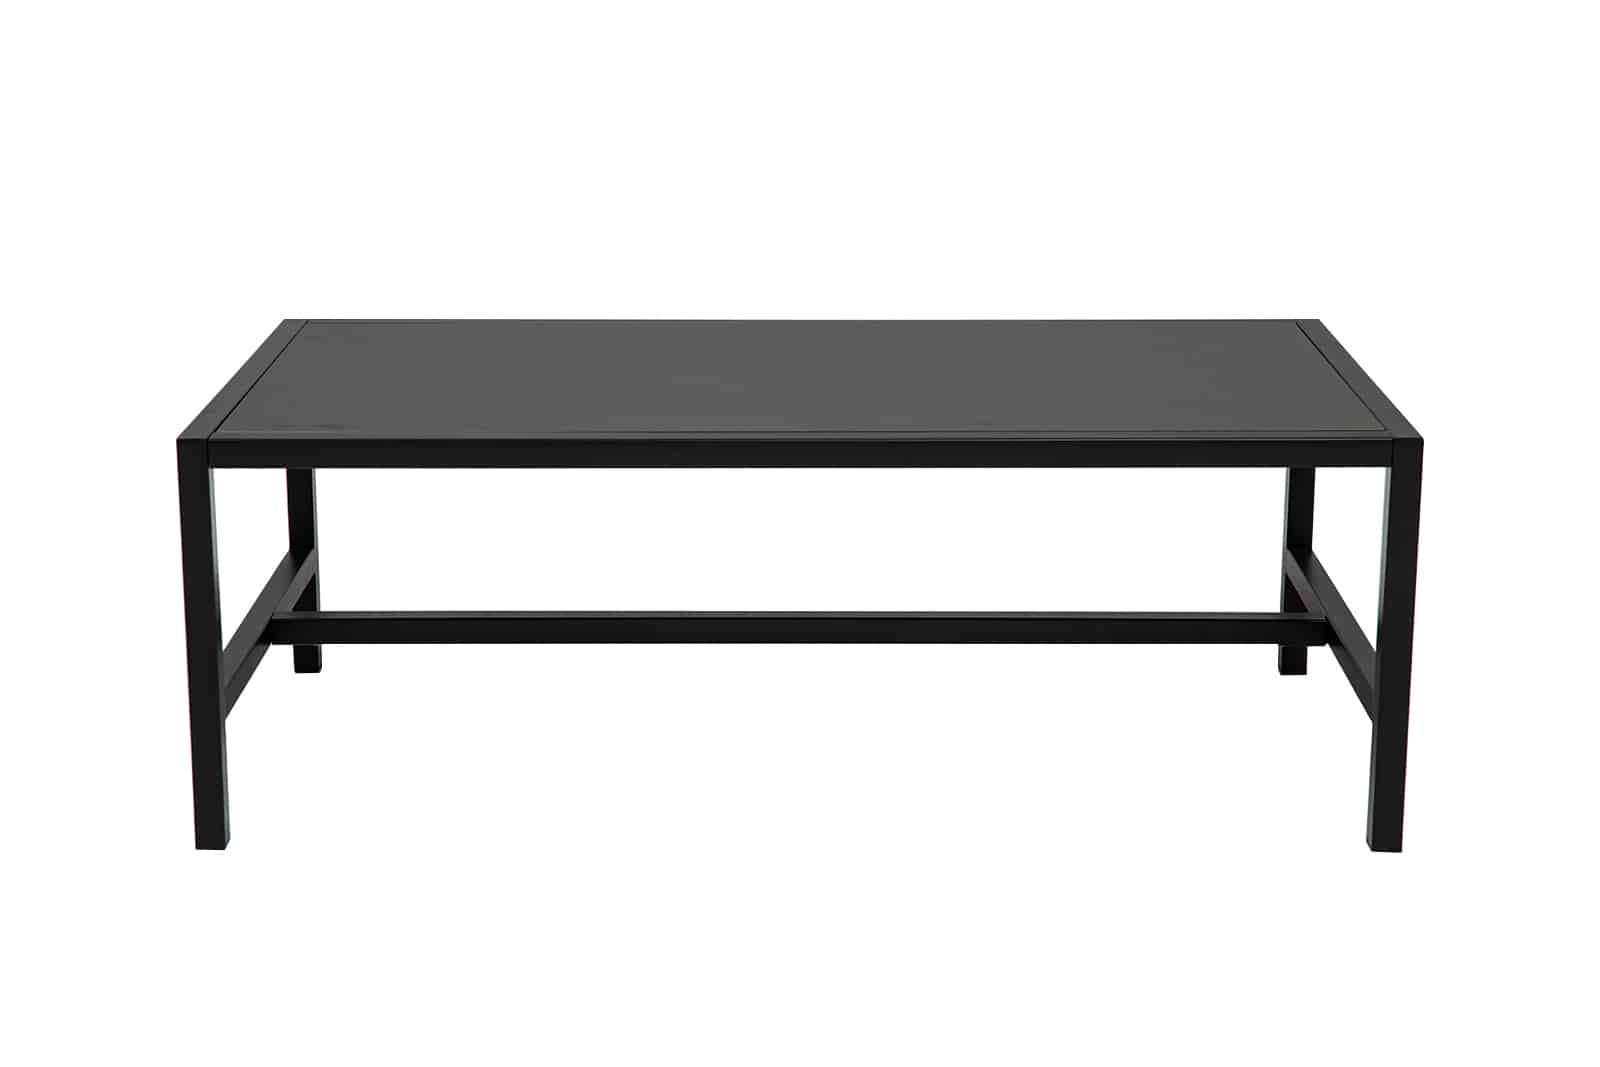 Atlas Rectangular Coffee Table – Black with Black Top – 120cmL x 60cmD x 42cmH